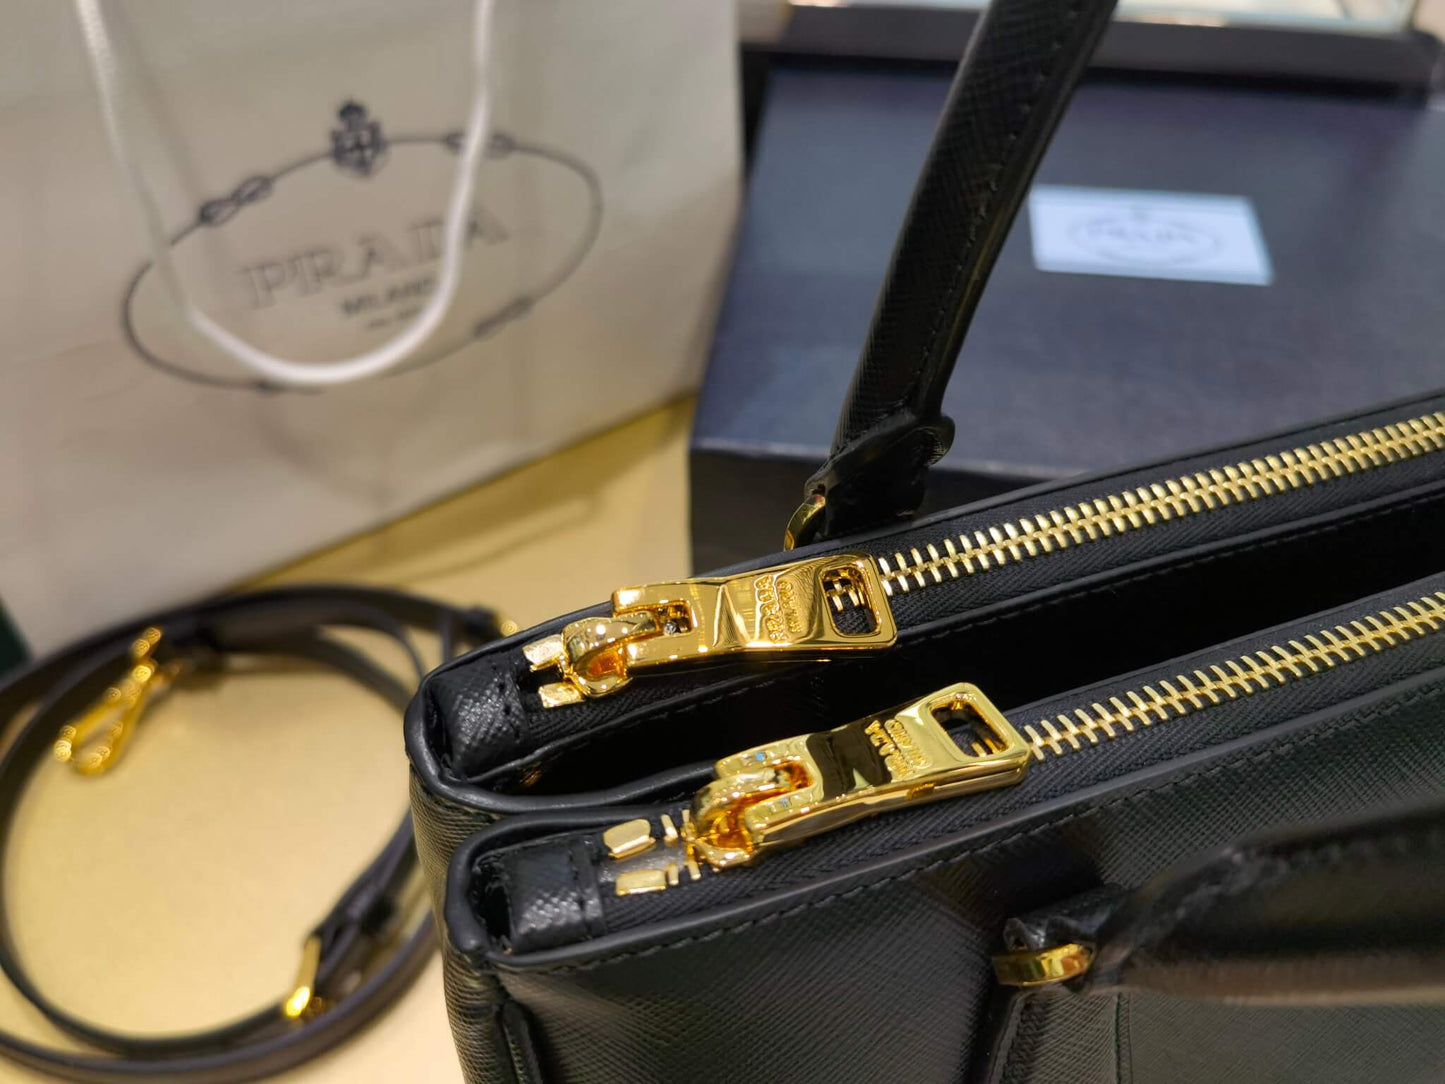 PRA 1BA863 28cm Galleria Handbag shoulder bag black